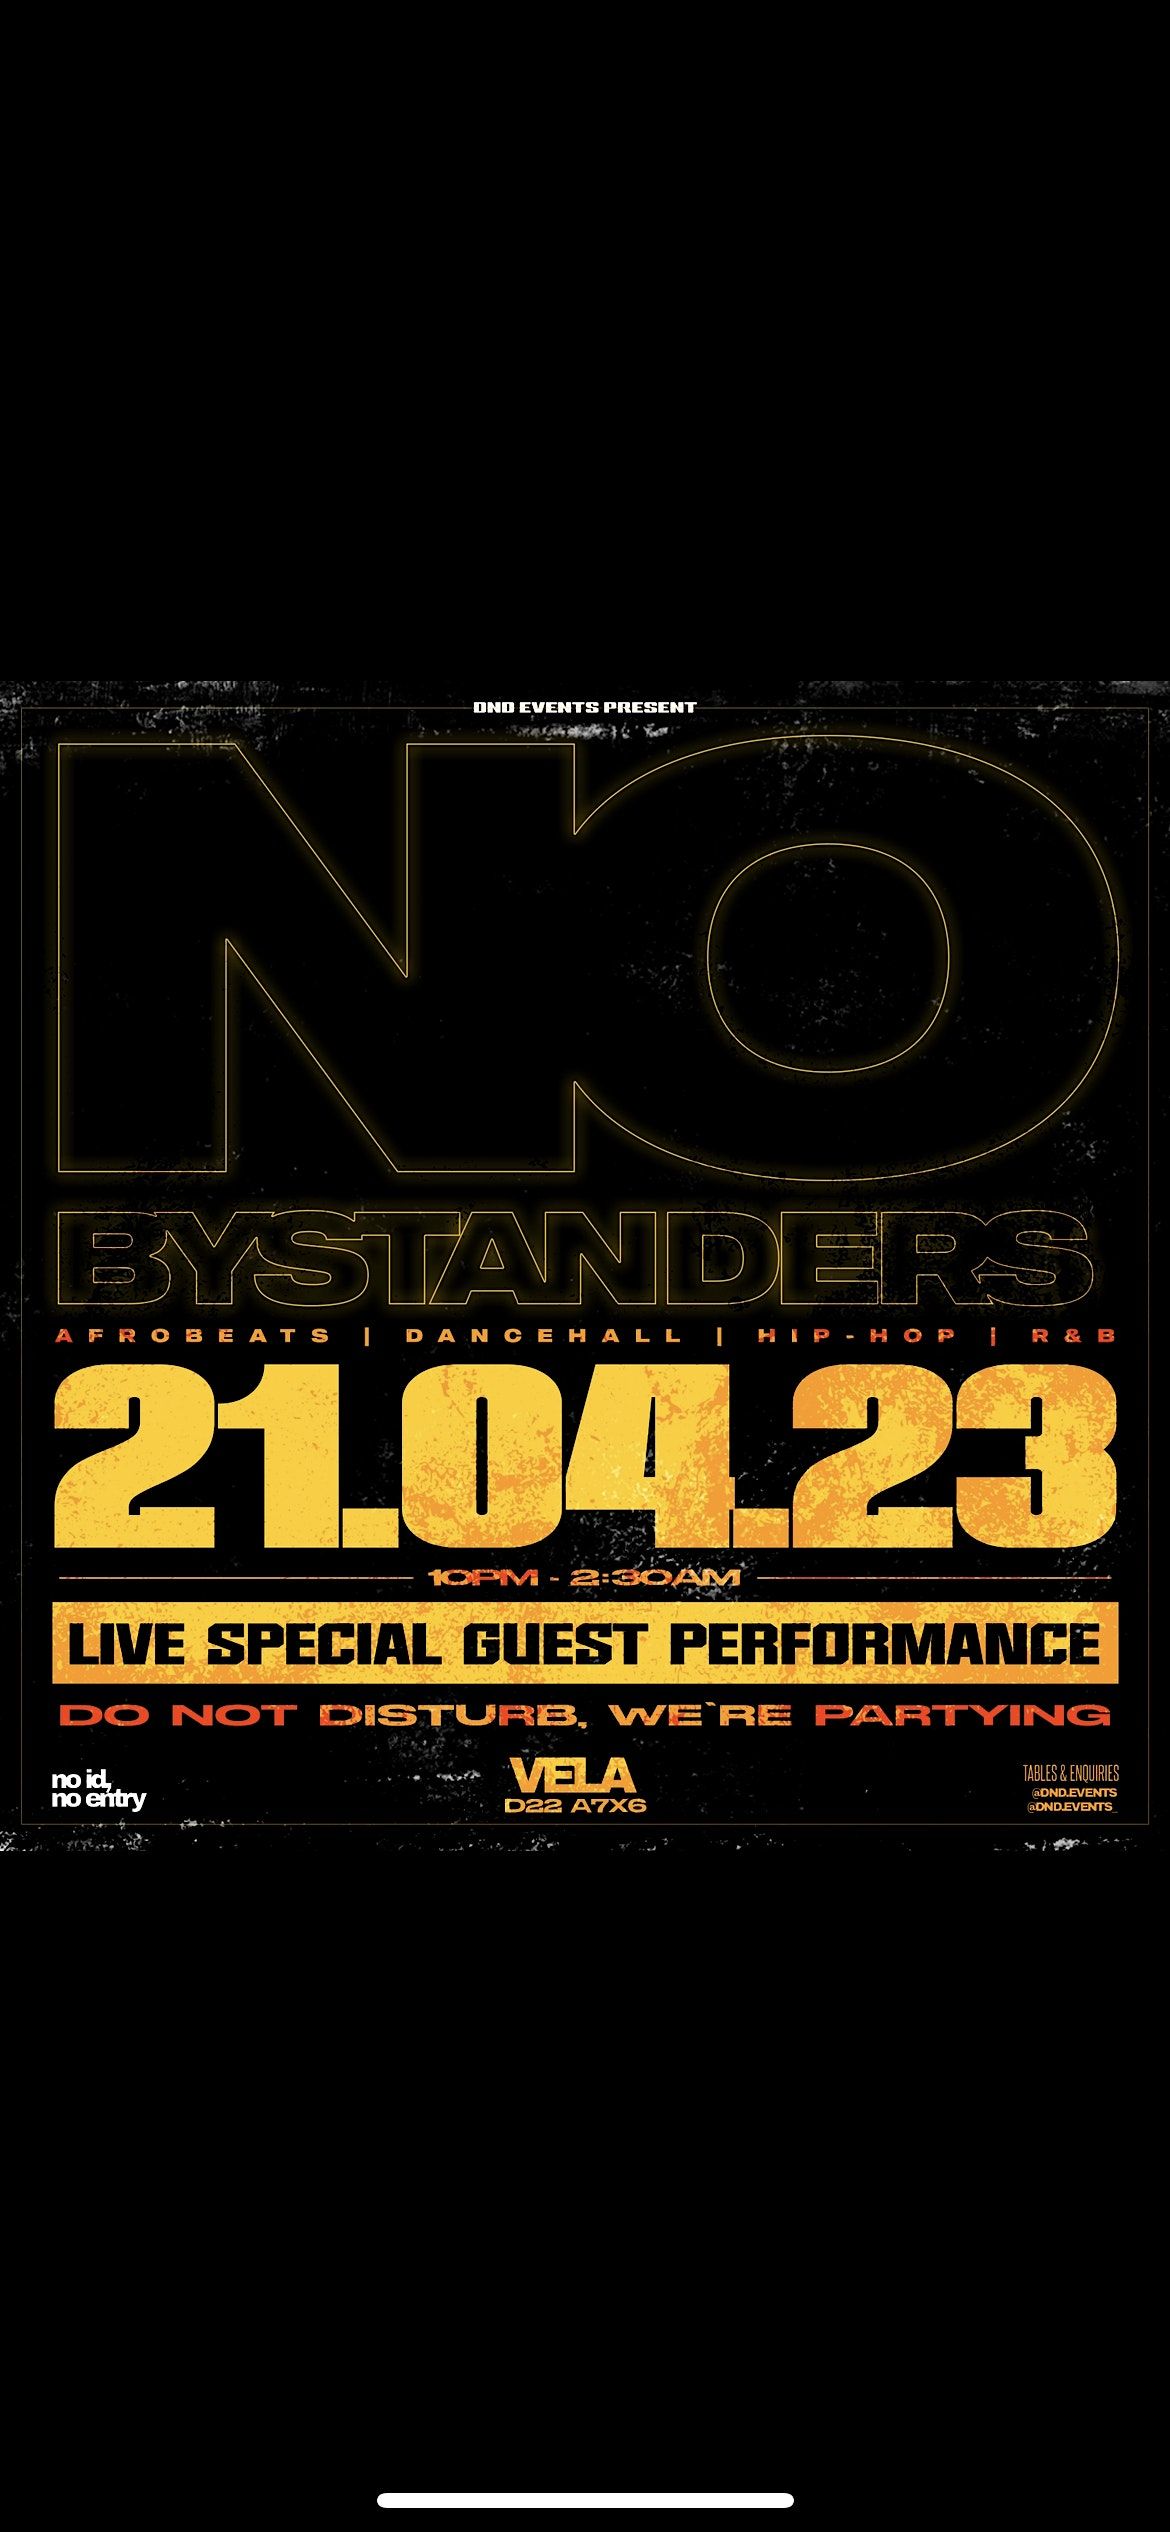 DND Events Presents No Bystanders